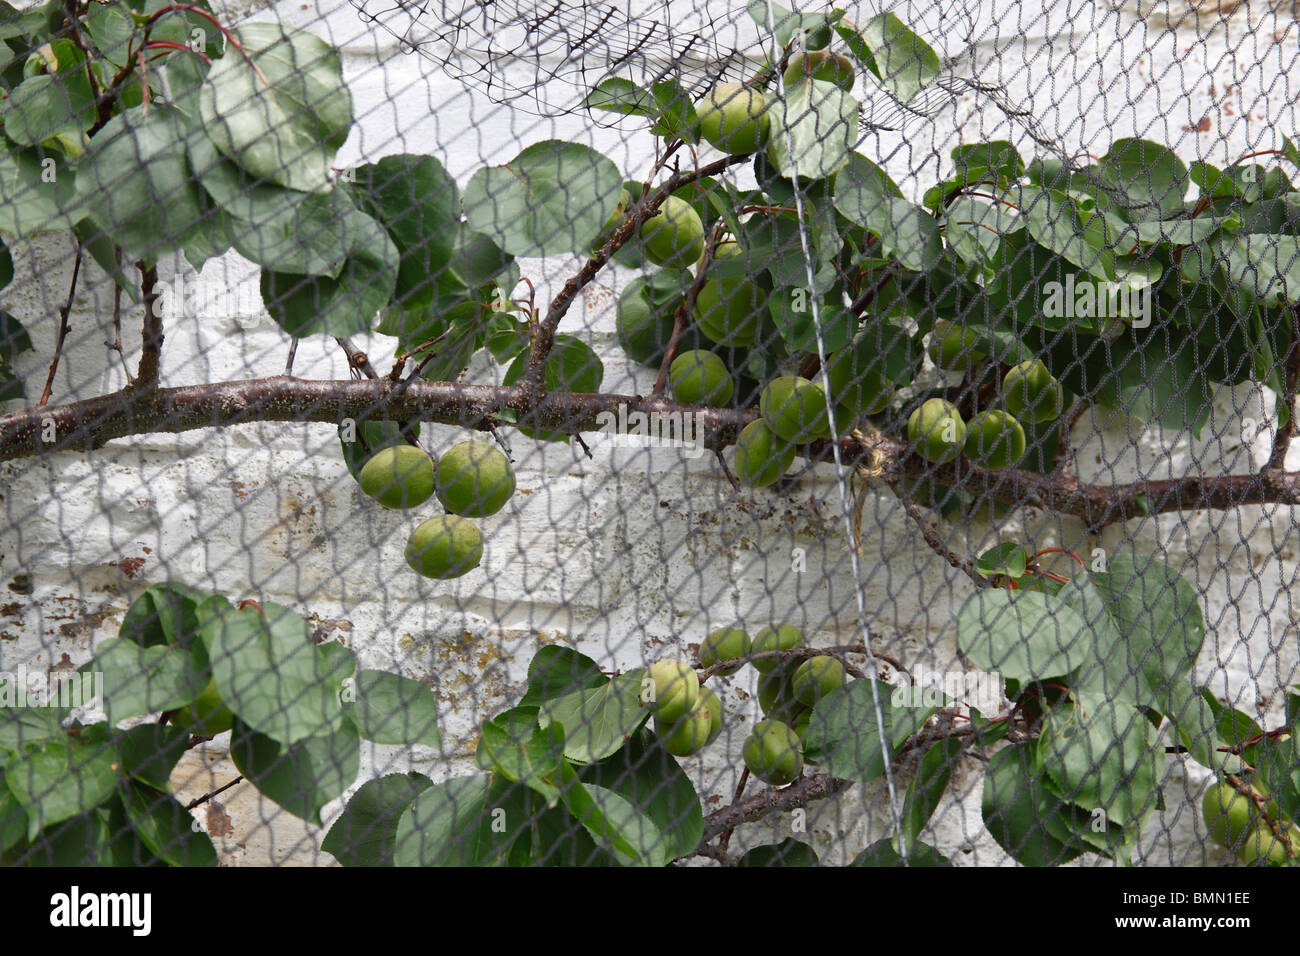 Aoricot (Prunus armeniaca) Moorpark ripening on tree behind protective net Stock Photo